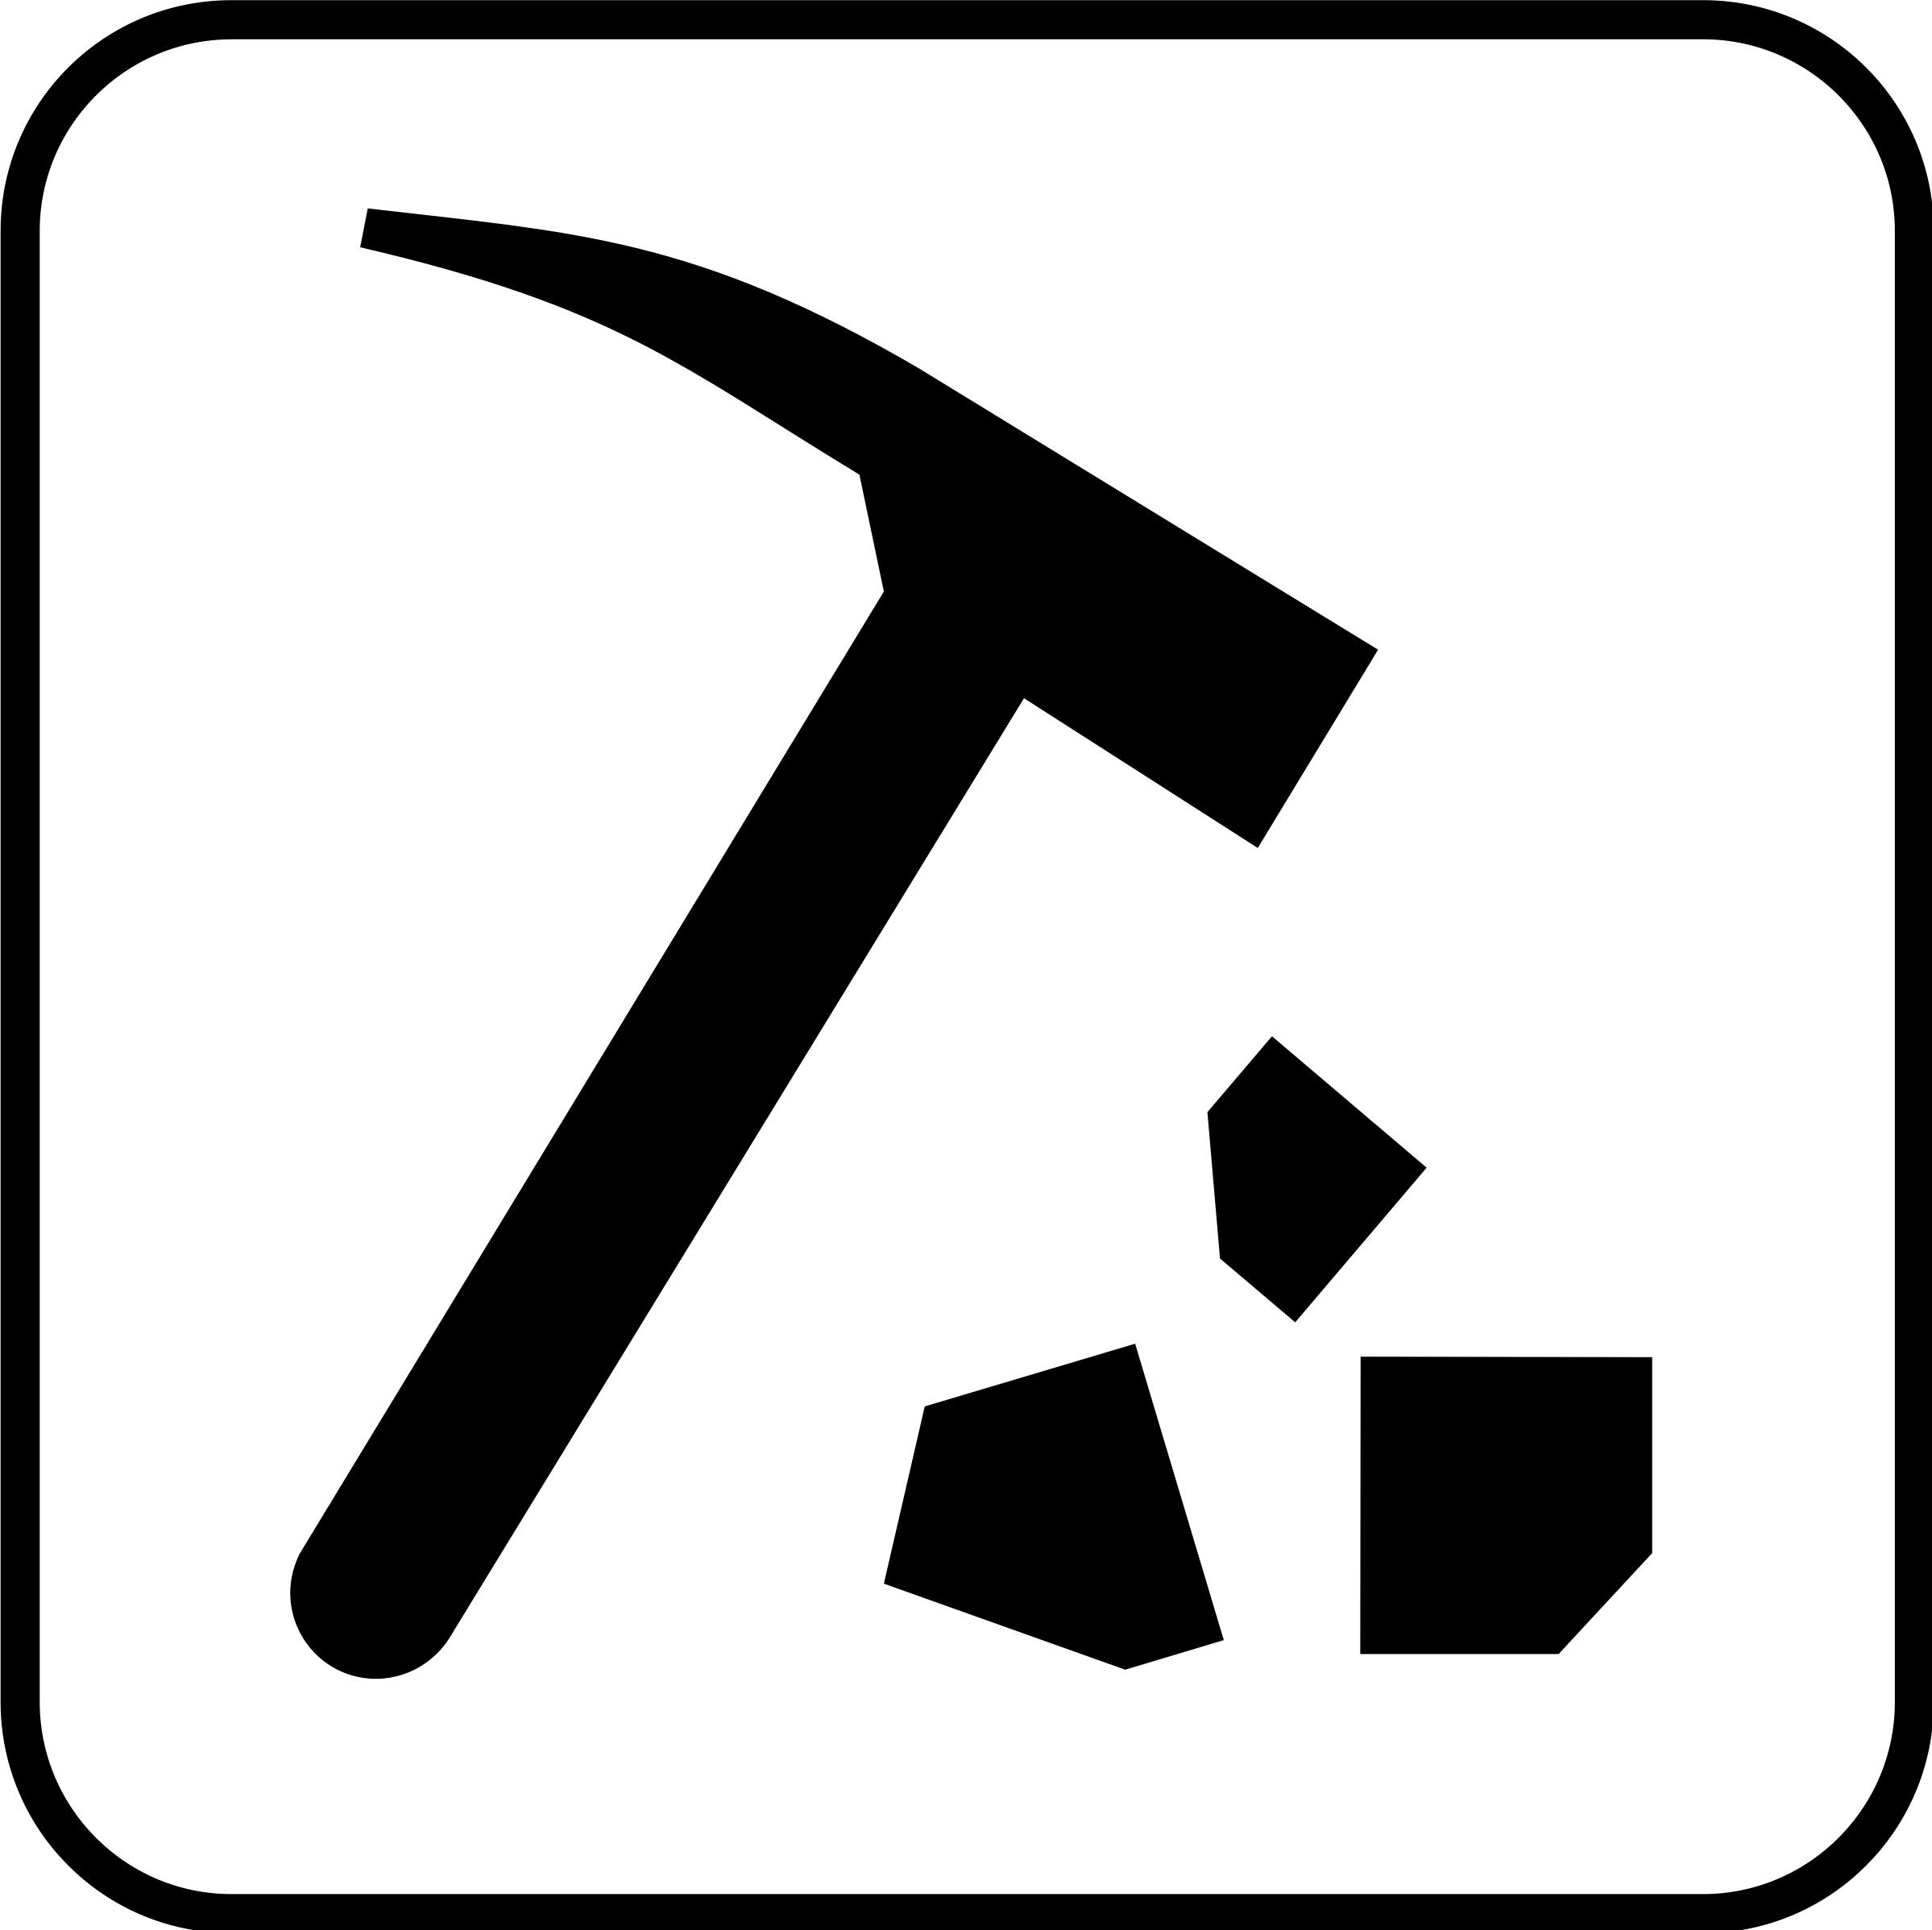 Clipart - Land recreation symbols 19